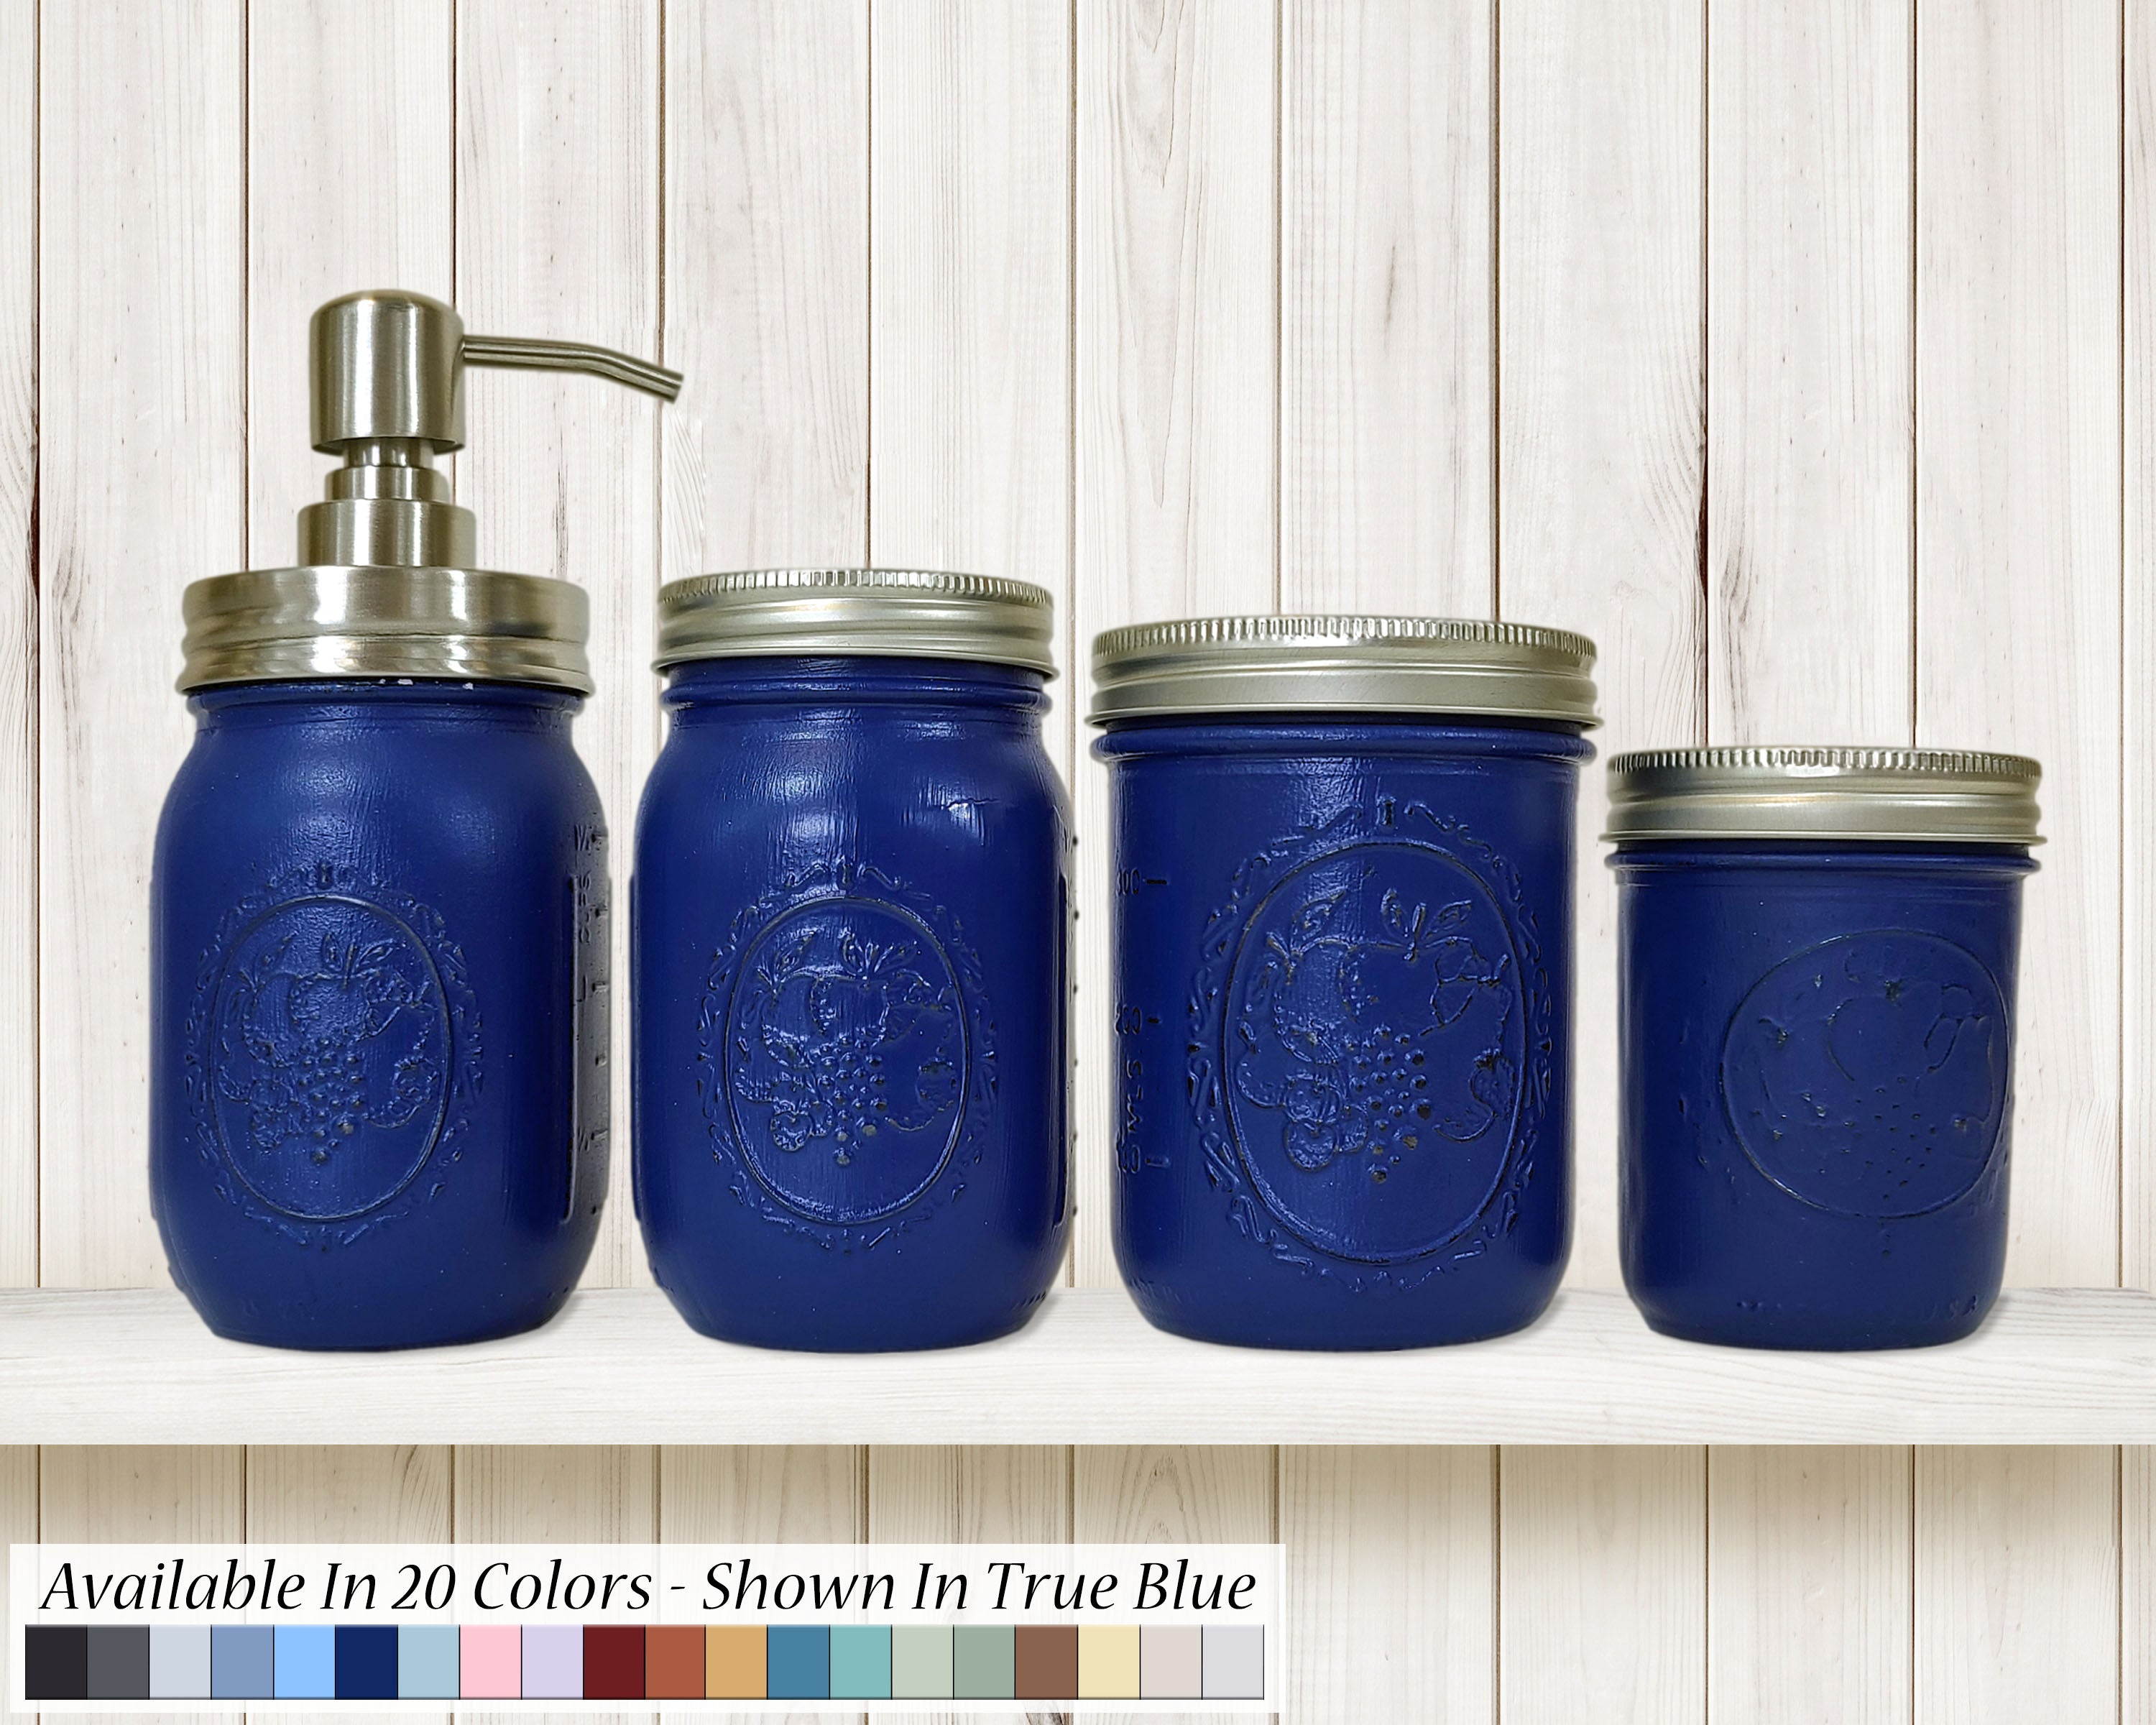 Custom Painted Mason Jar Bathroom Sets, Shown in True Blue with Silver Lids